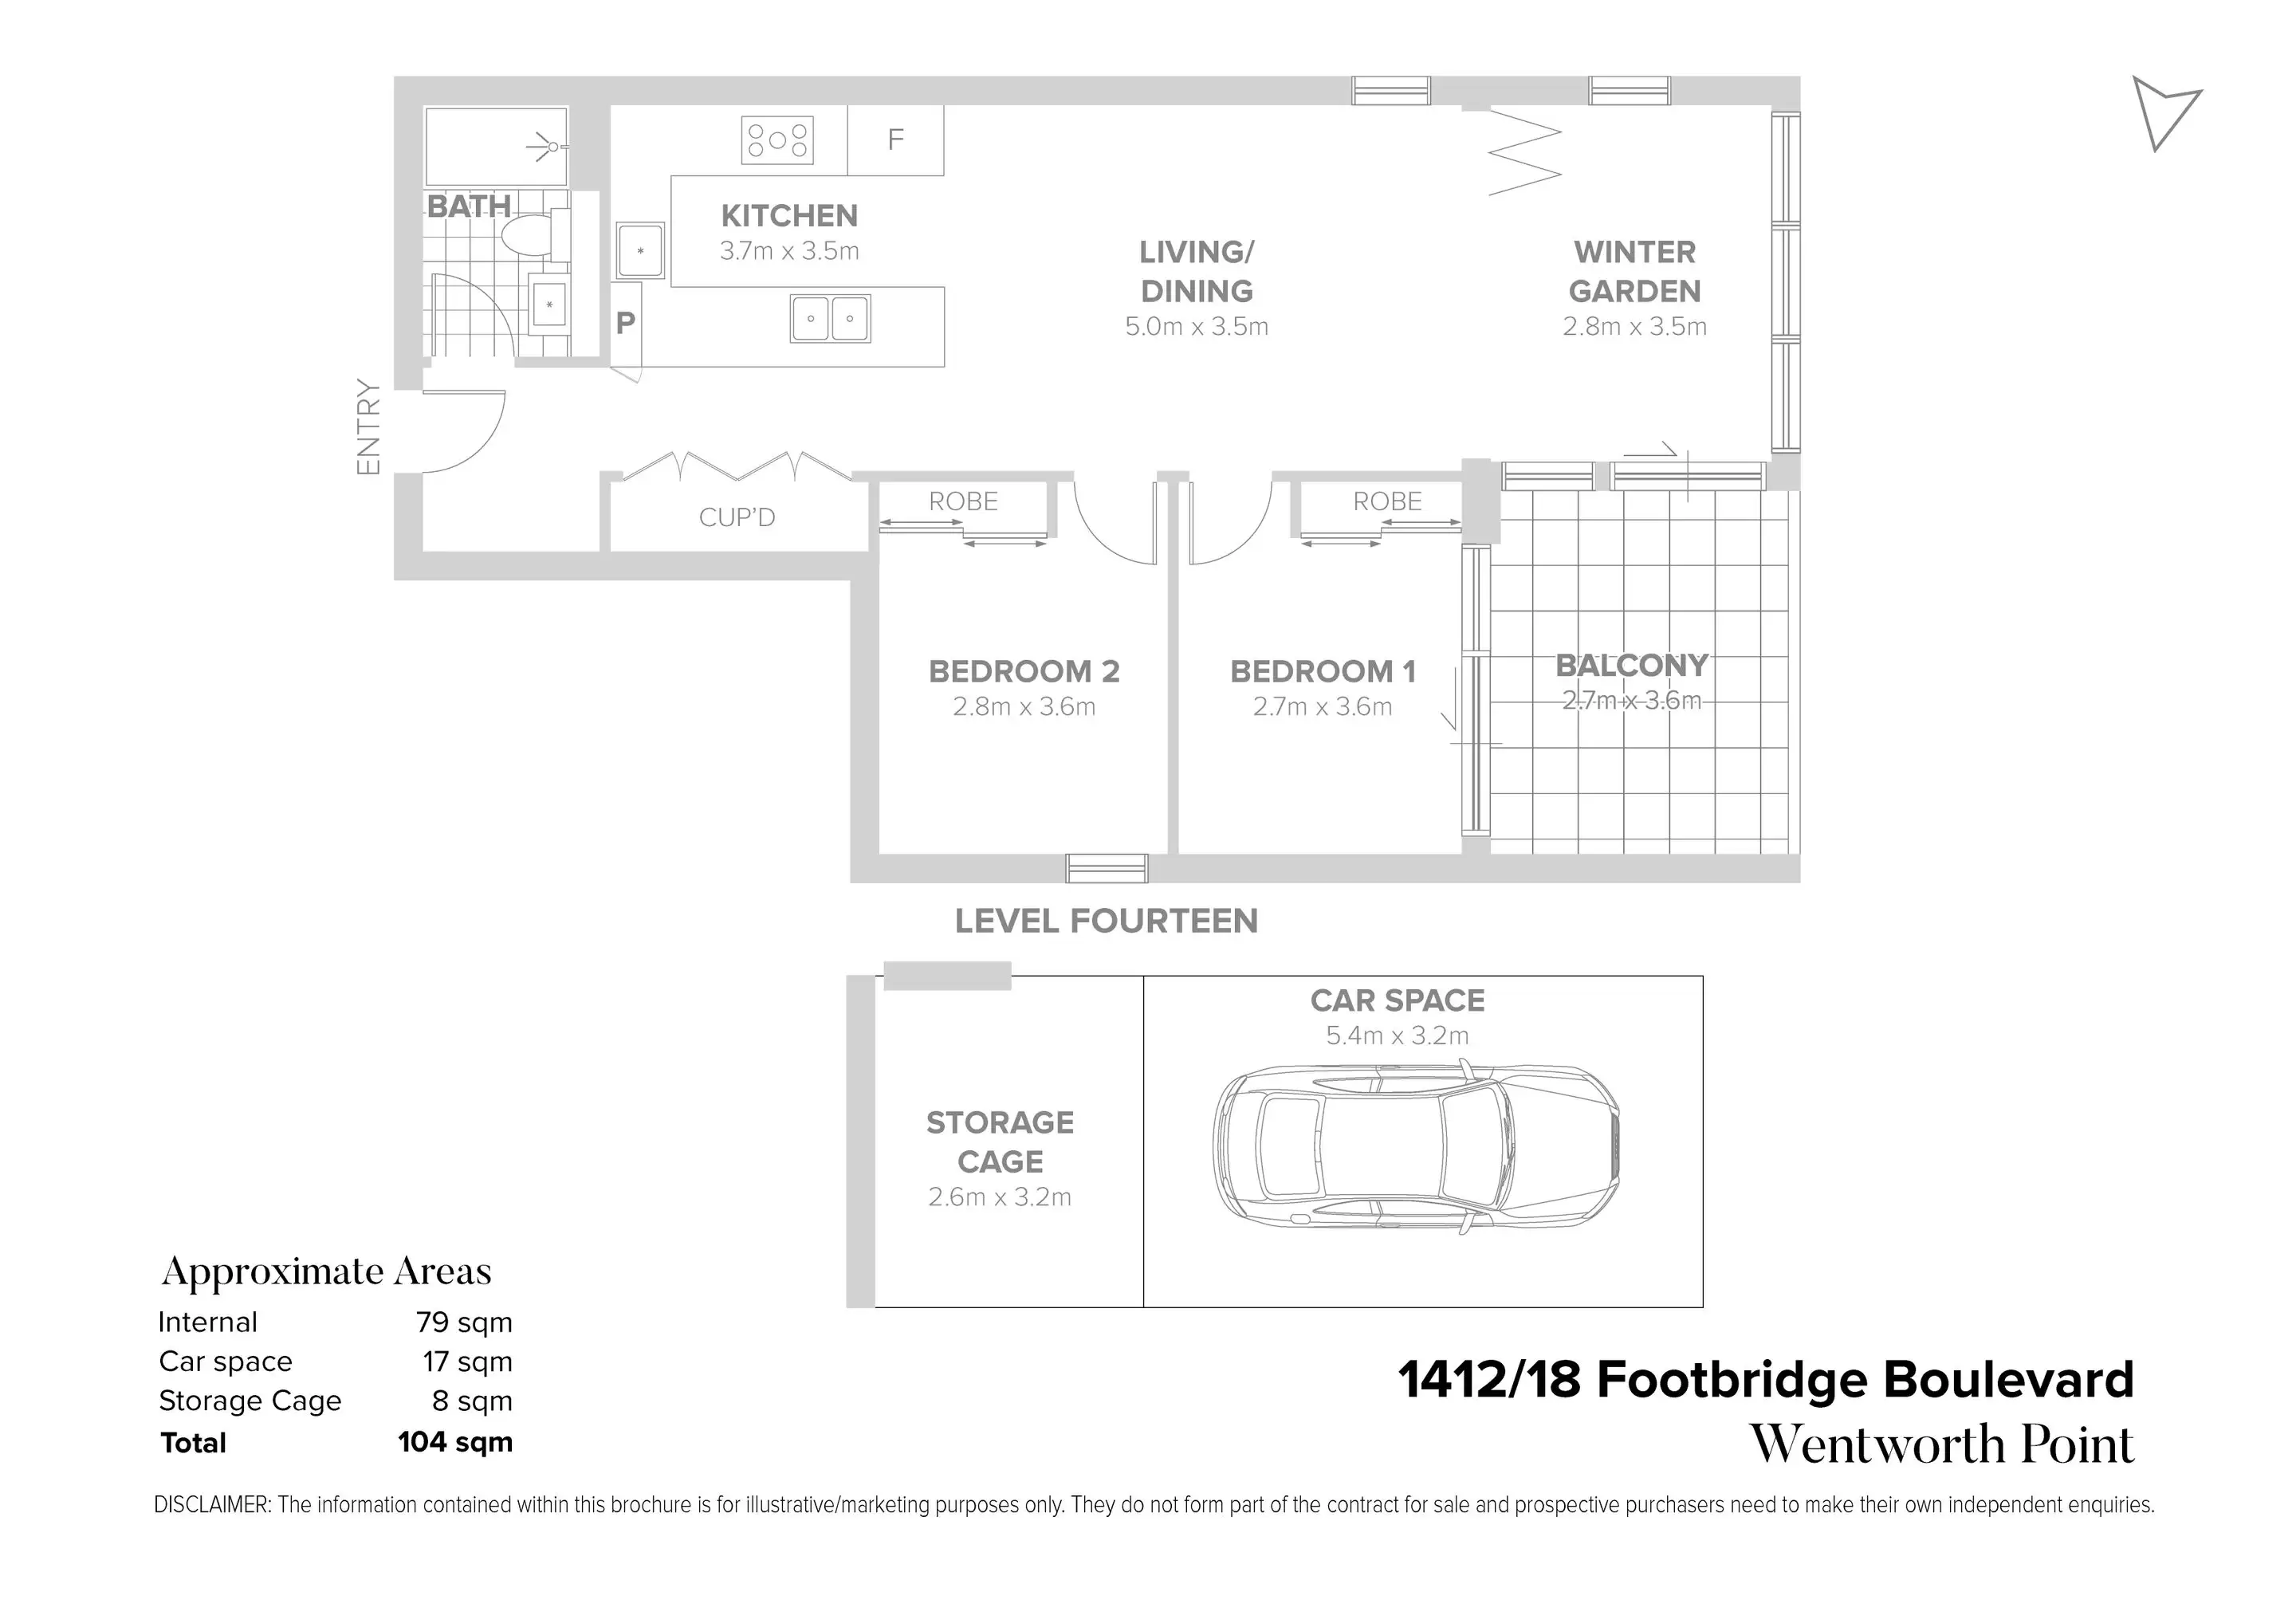 1412/18 Footbridge Boulevard, Wentworth Point Sold by Chidiac Realty - floorplan